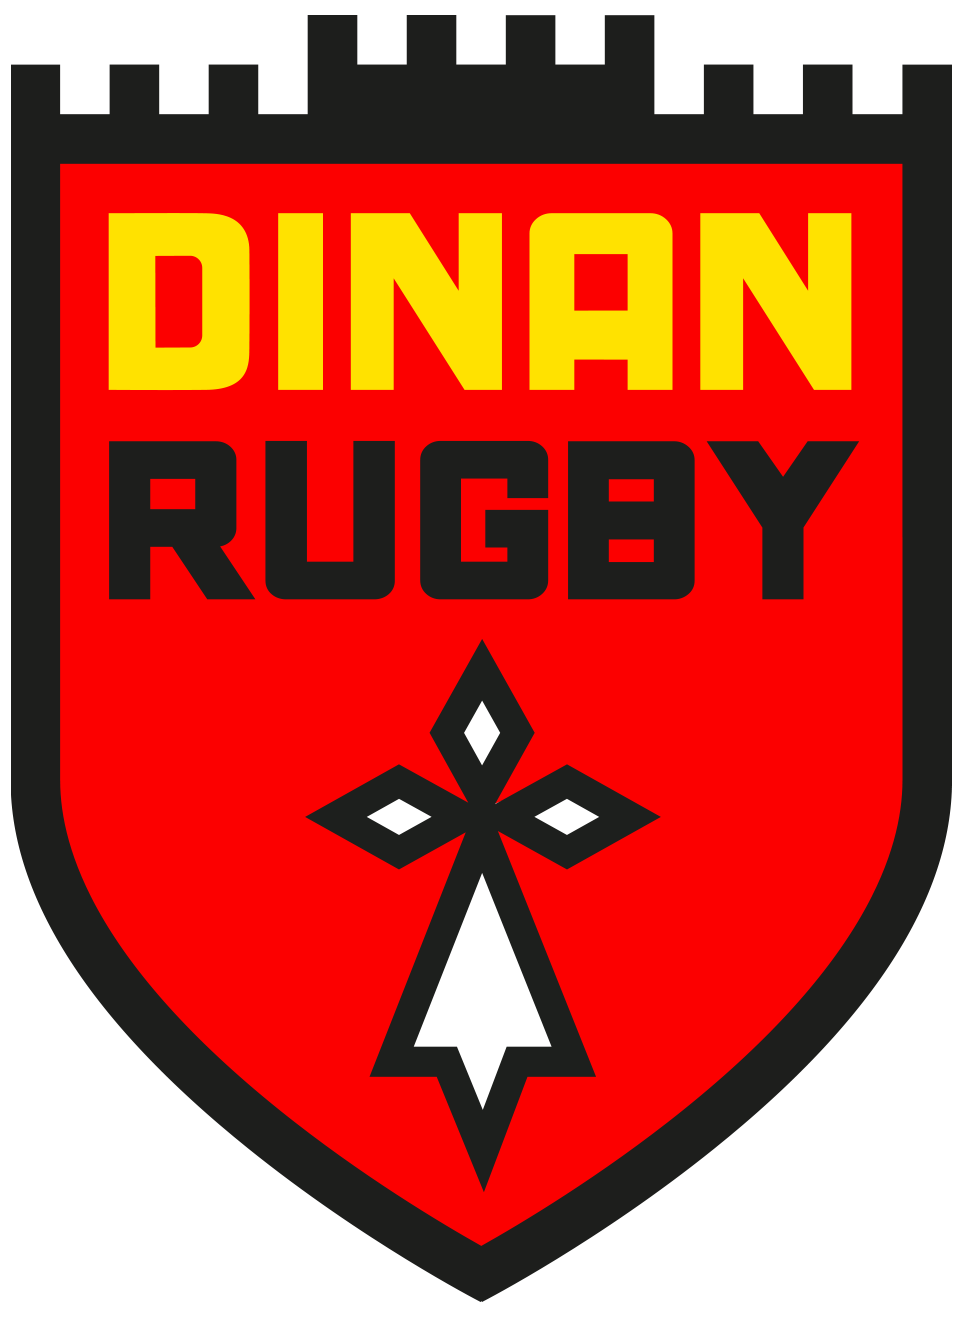 dinan-rugby-logo-6067380459e7b627514567.png